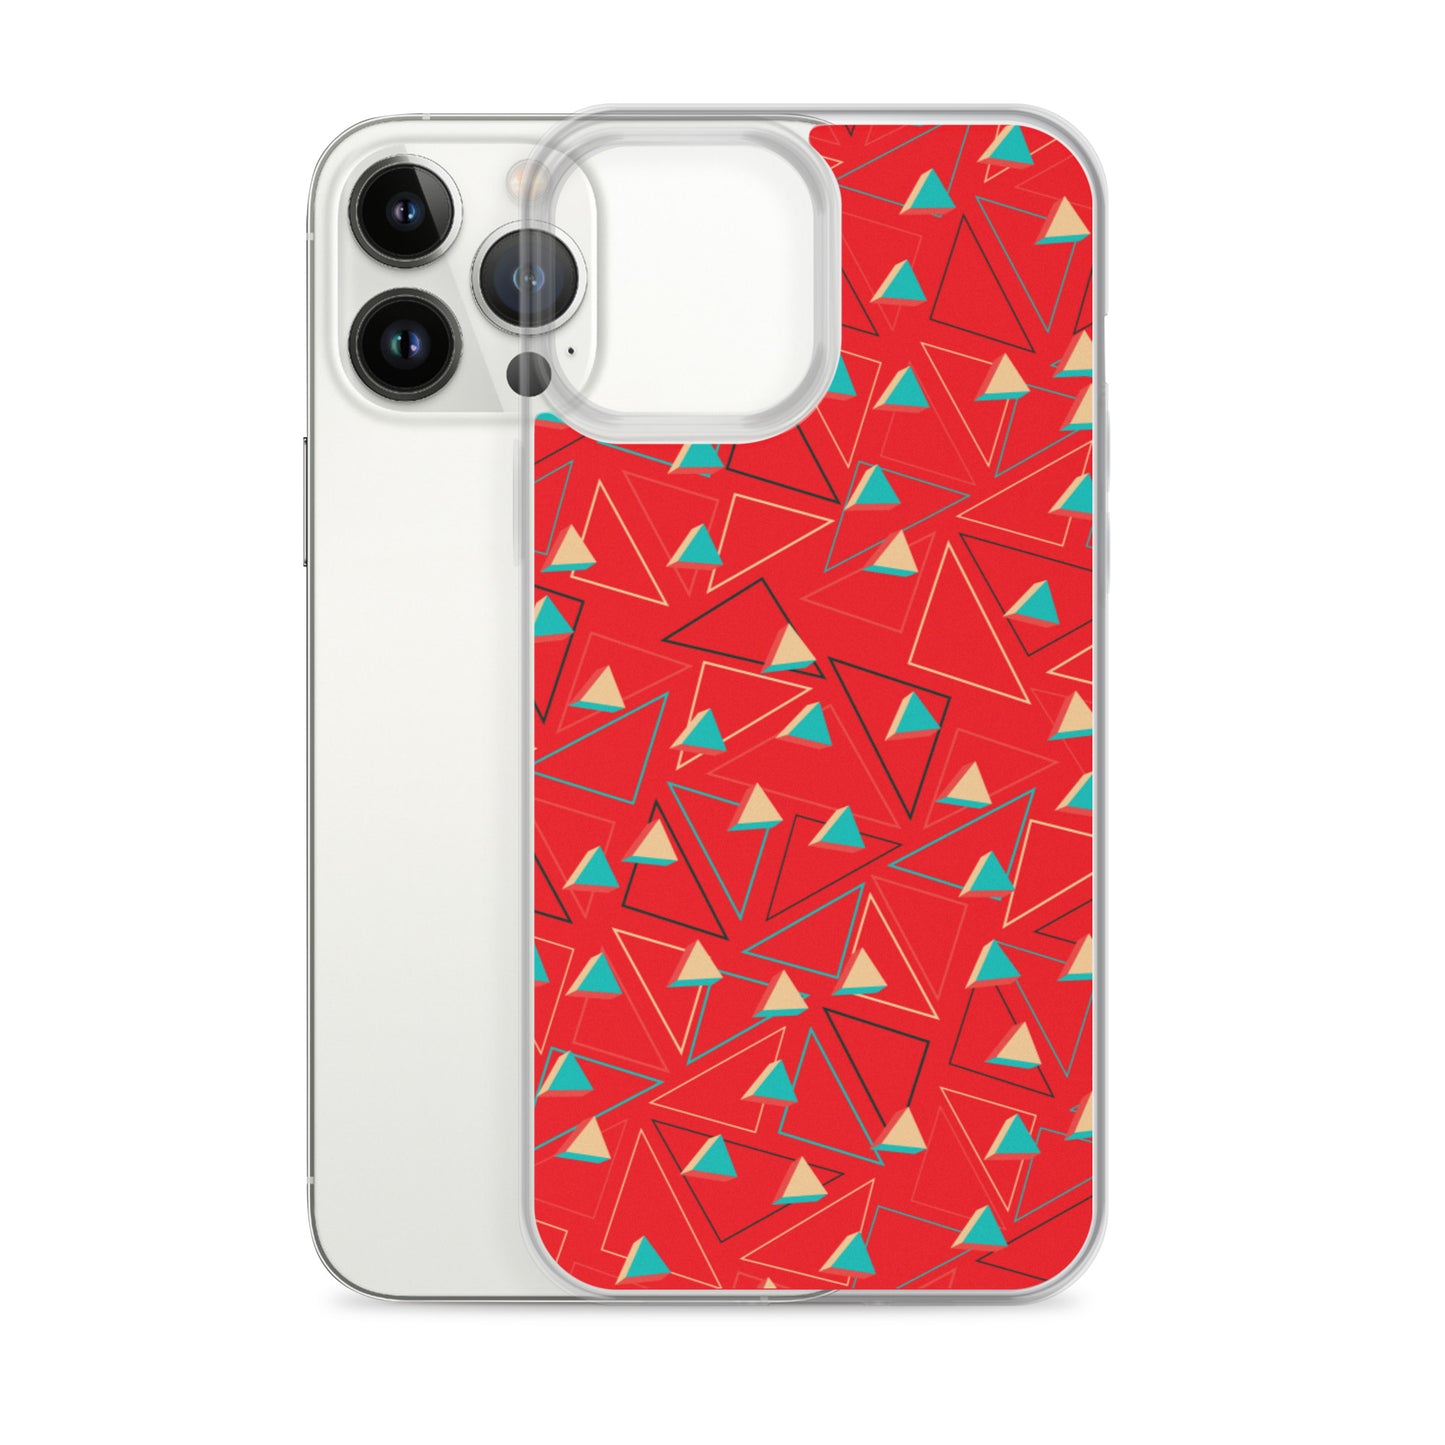 Rouge confit triangulaire Coque et skin adhésive iPhone